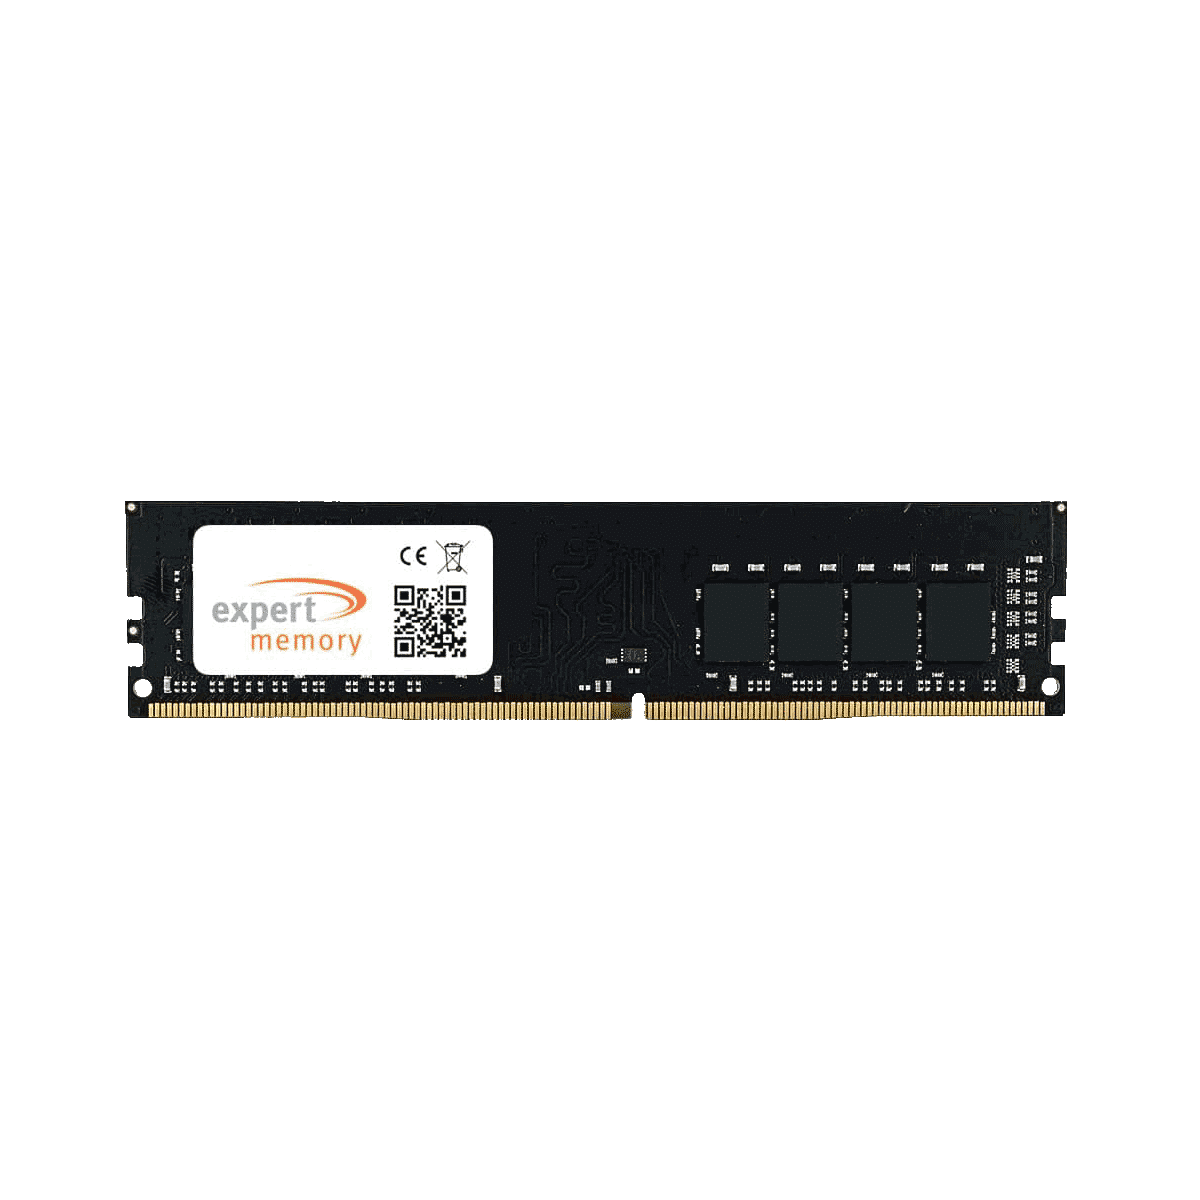 GB UDIMM RAM 4GB AX 3200 Gigabyte Mainboard MEMORY Memory 4 Aorus EXPERT 2Rx8 DDR4 Upgrade B560M